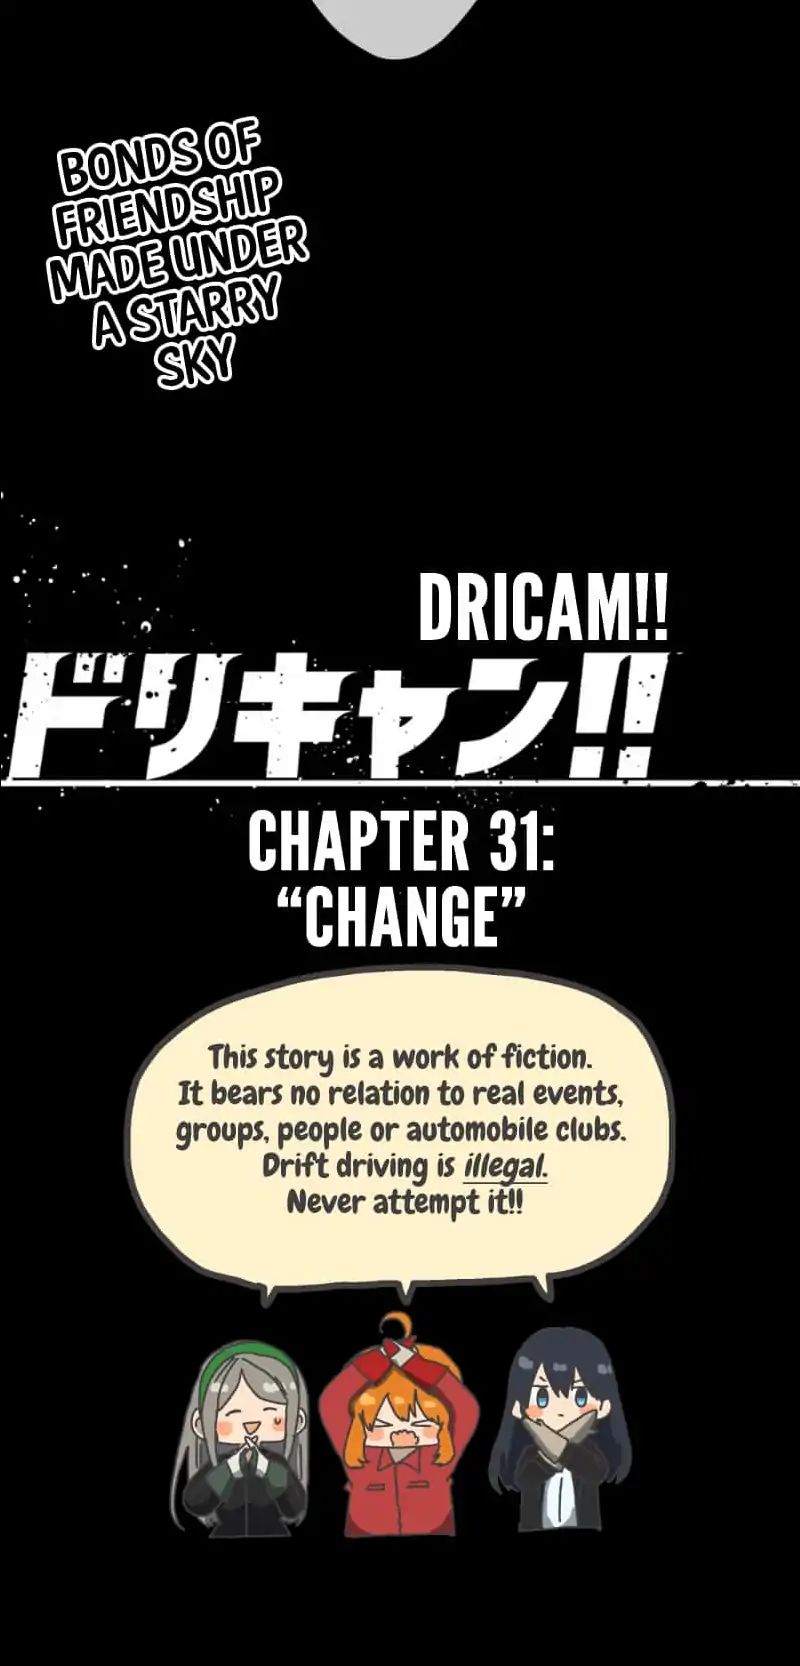 Dricam!! Chapter 31: Change